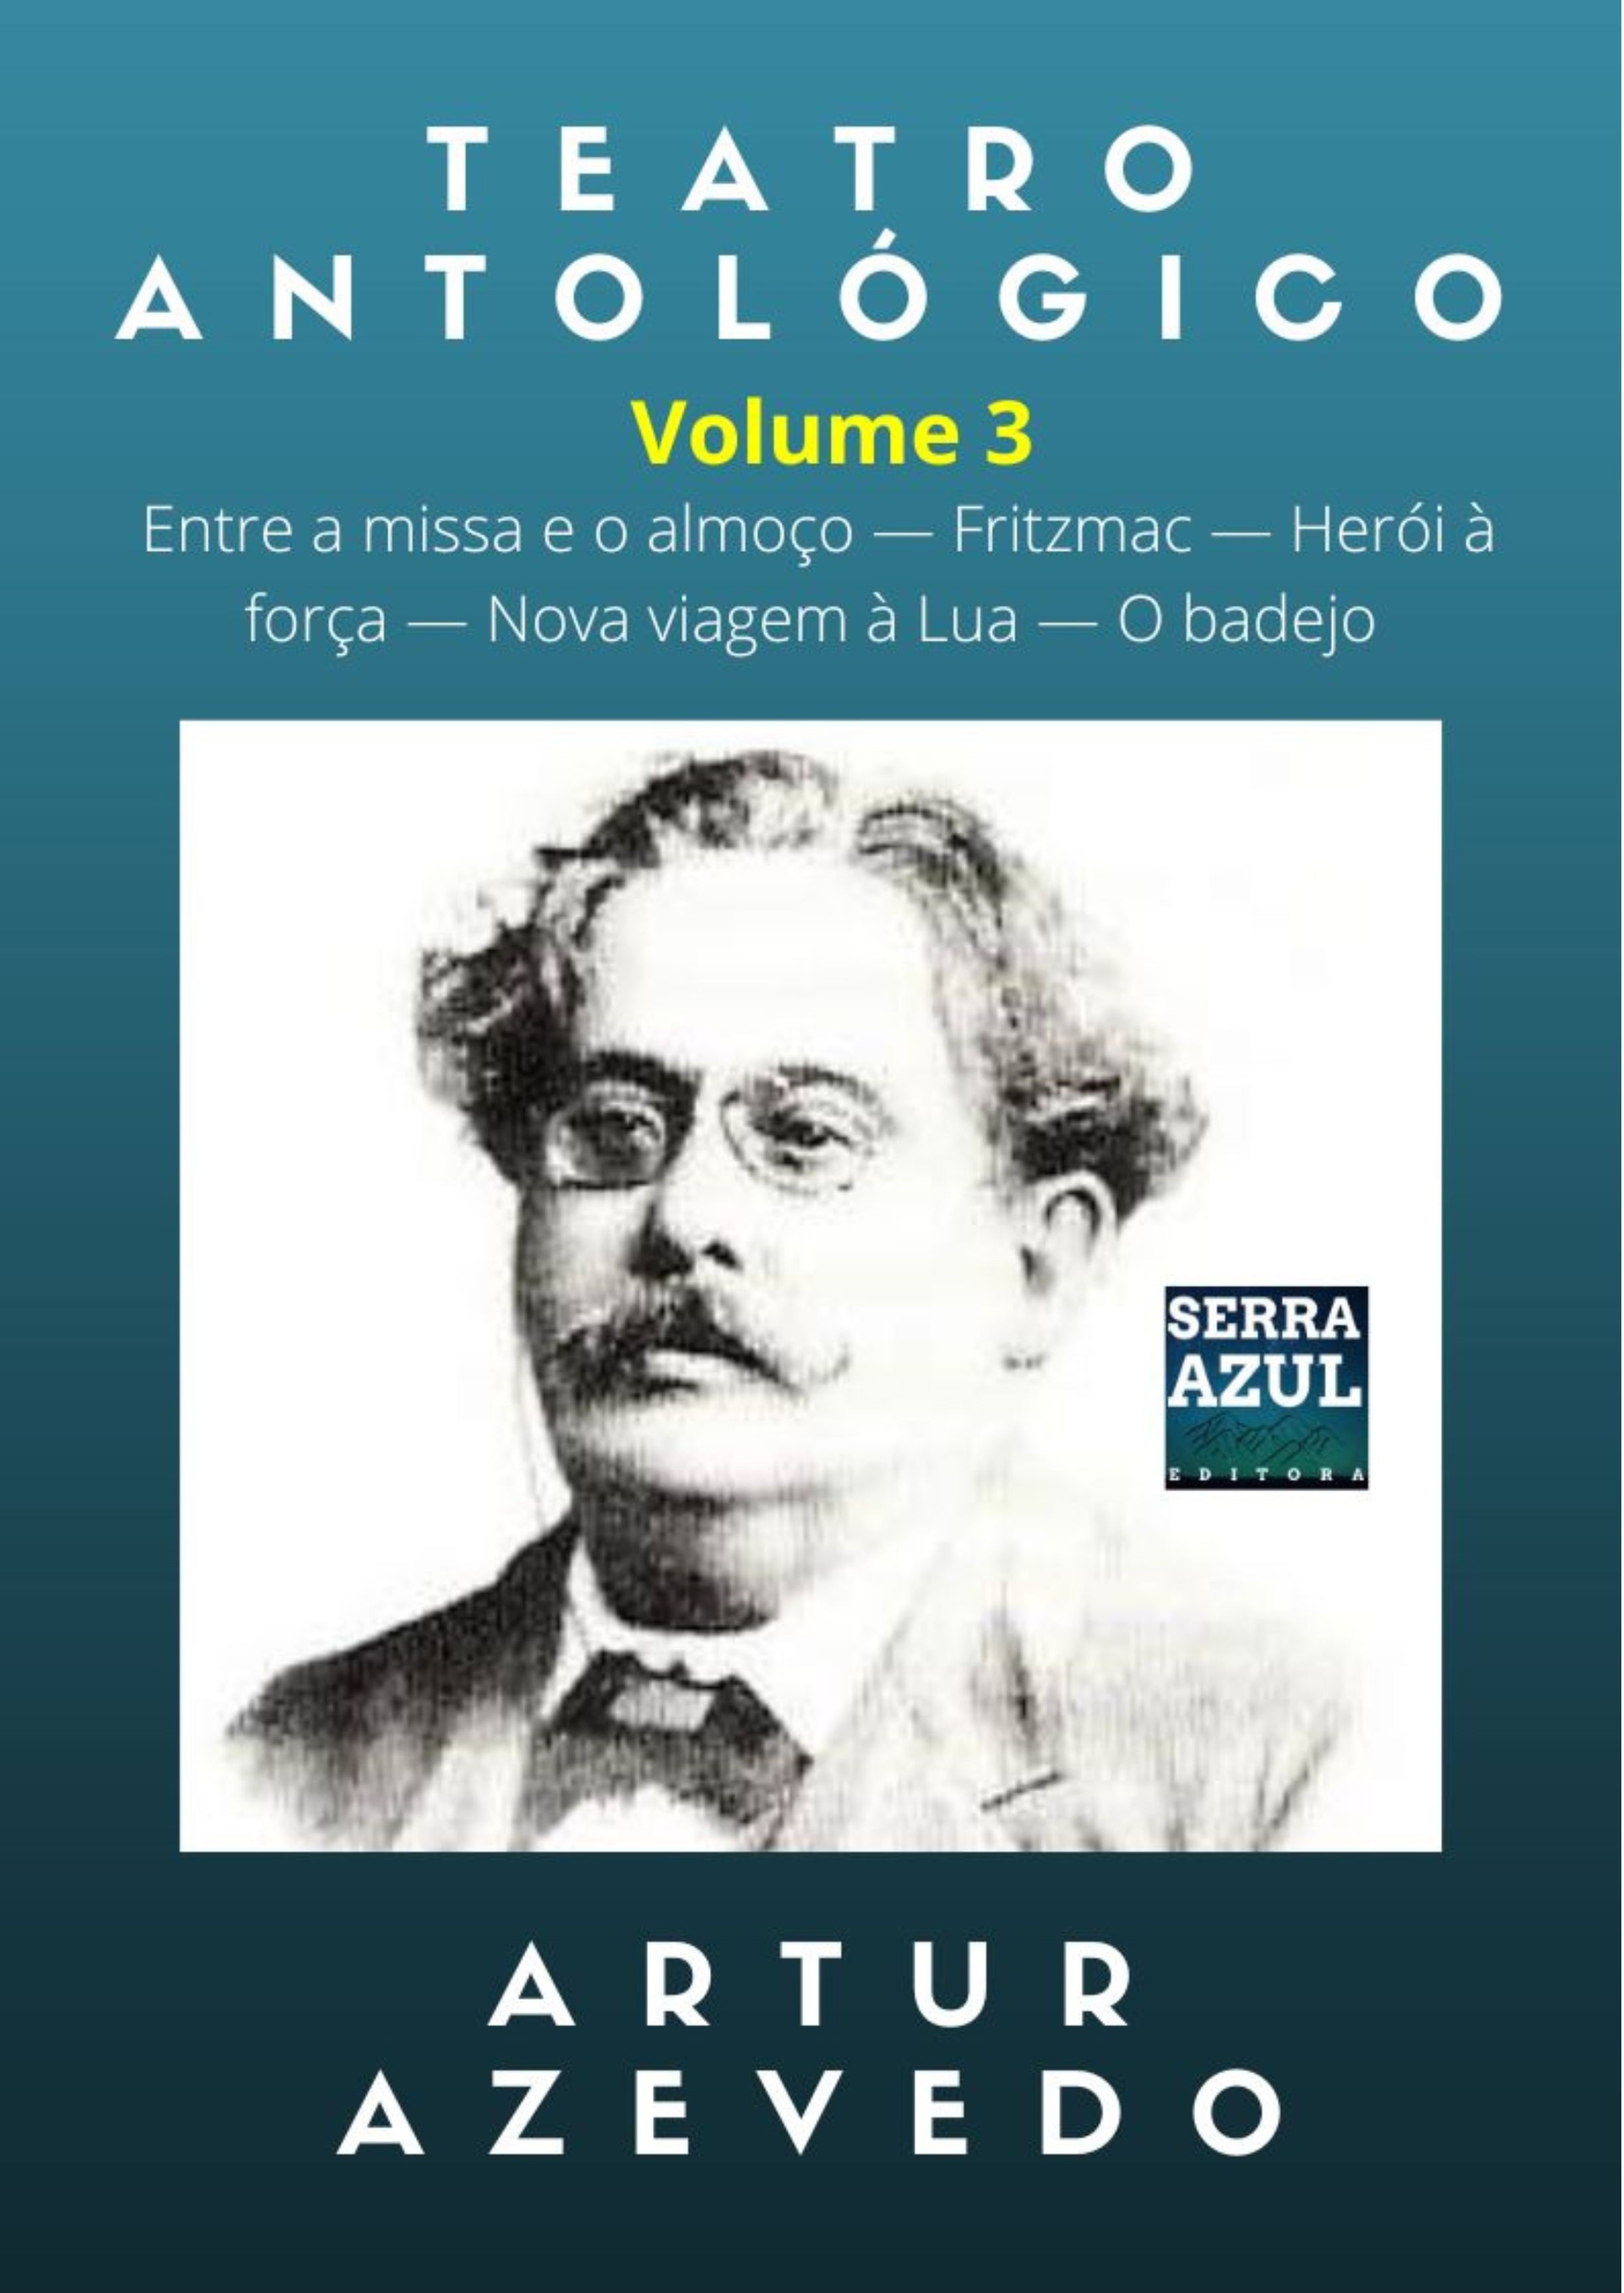 Teatro Antológico de Artur Azevedo – Volume 3